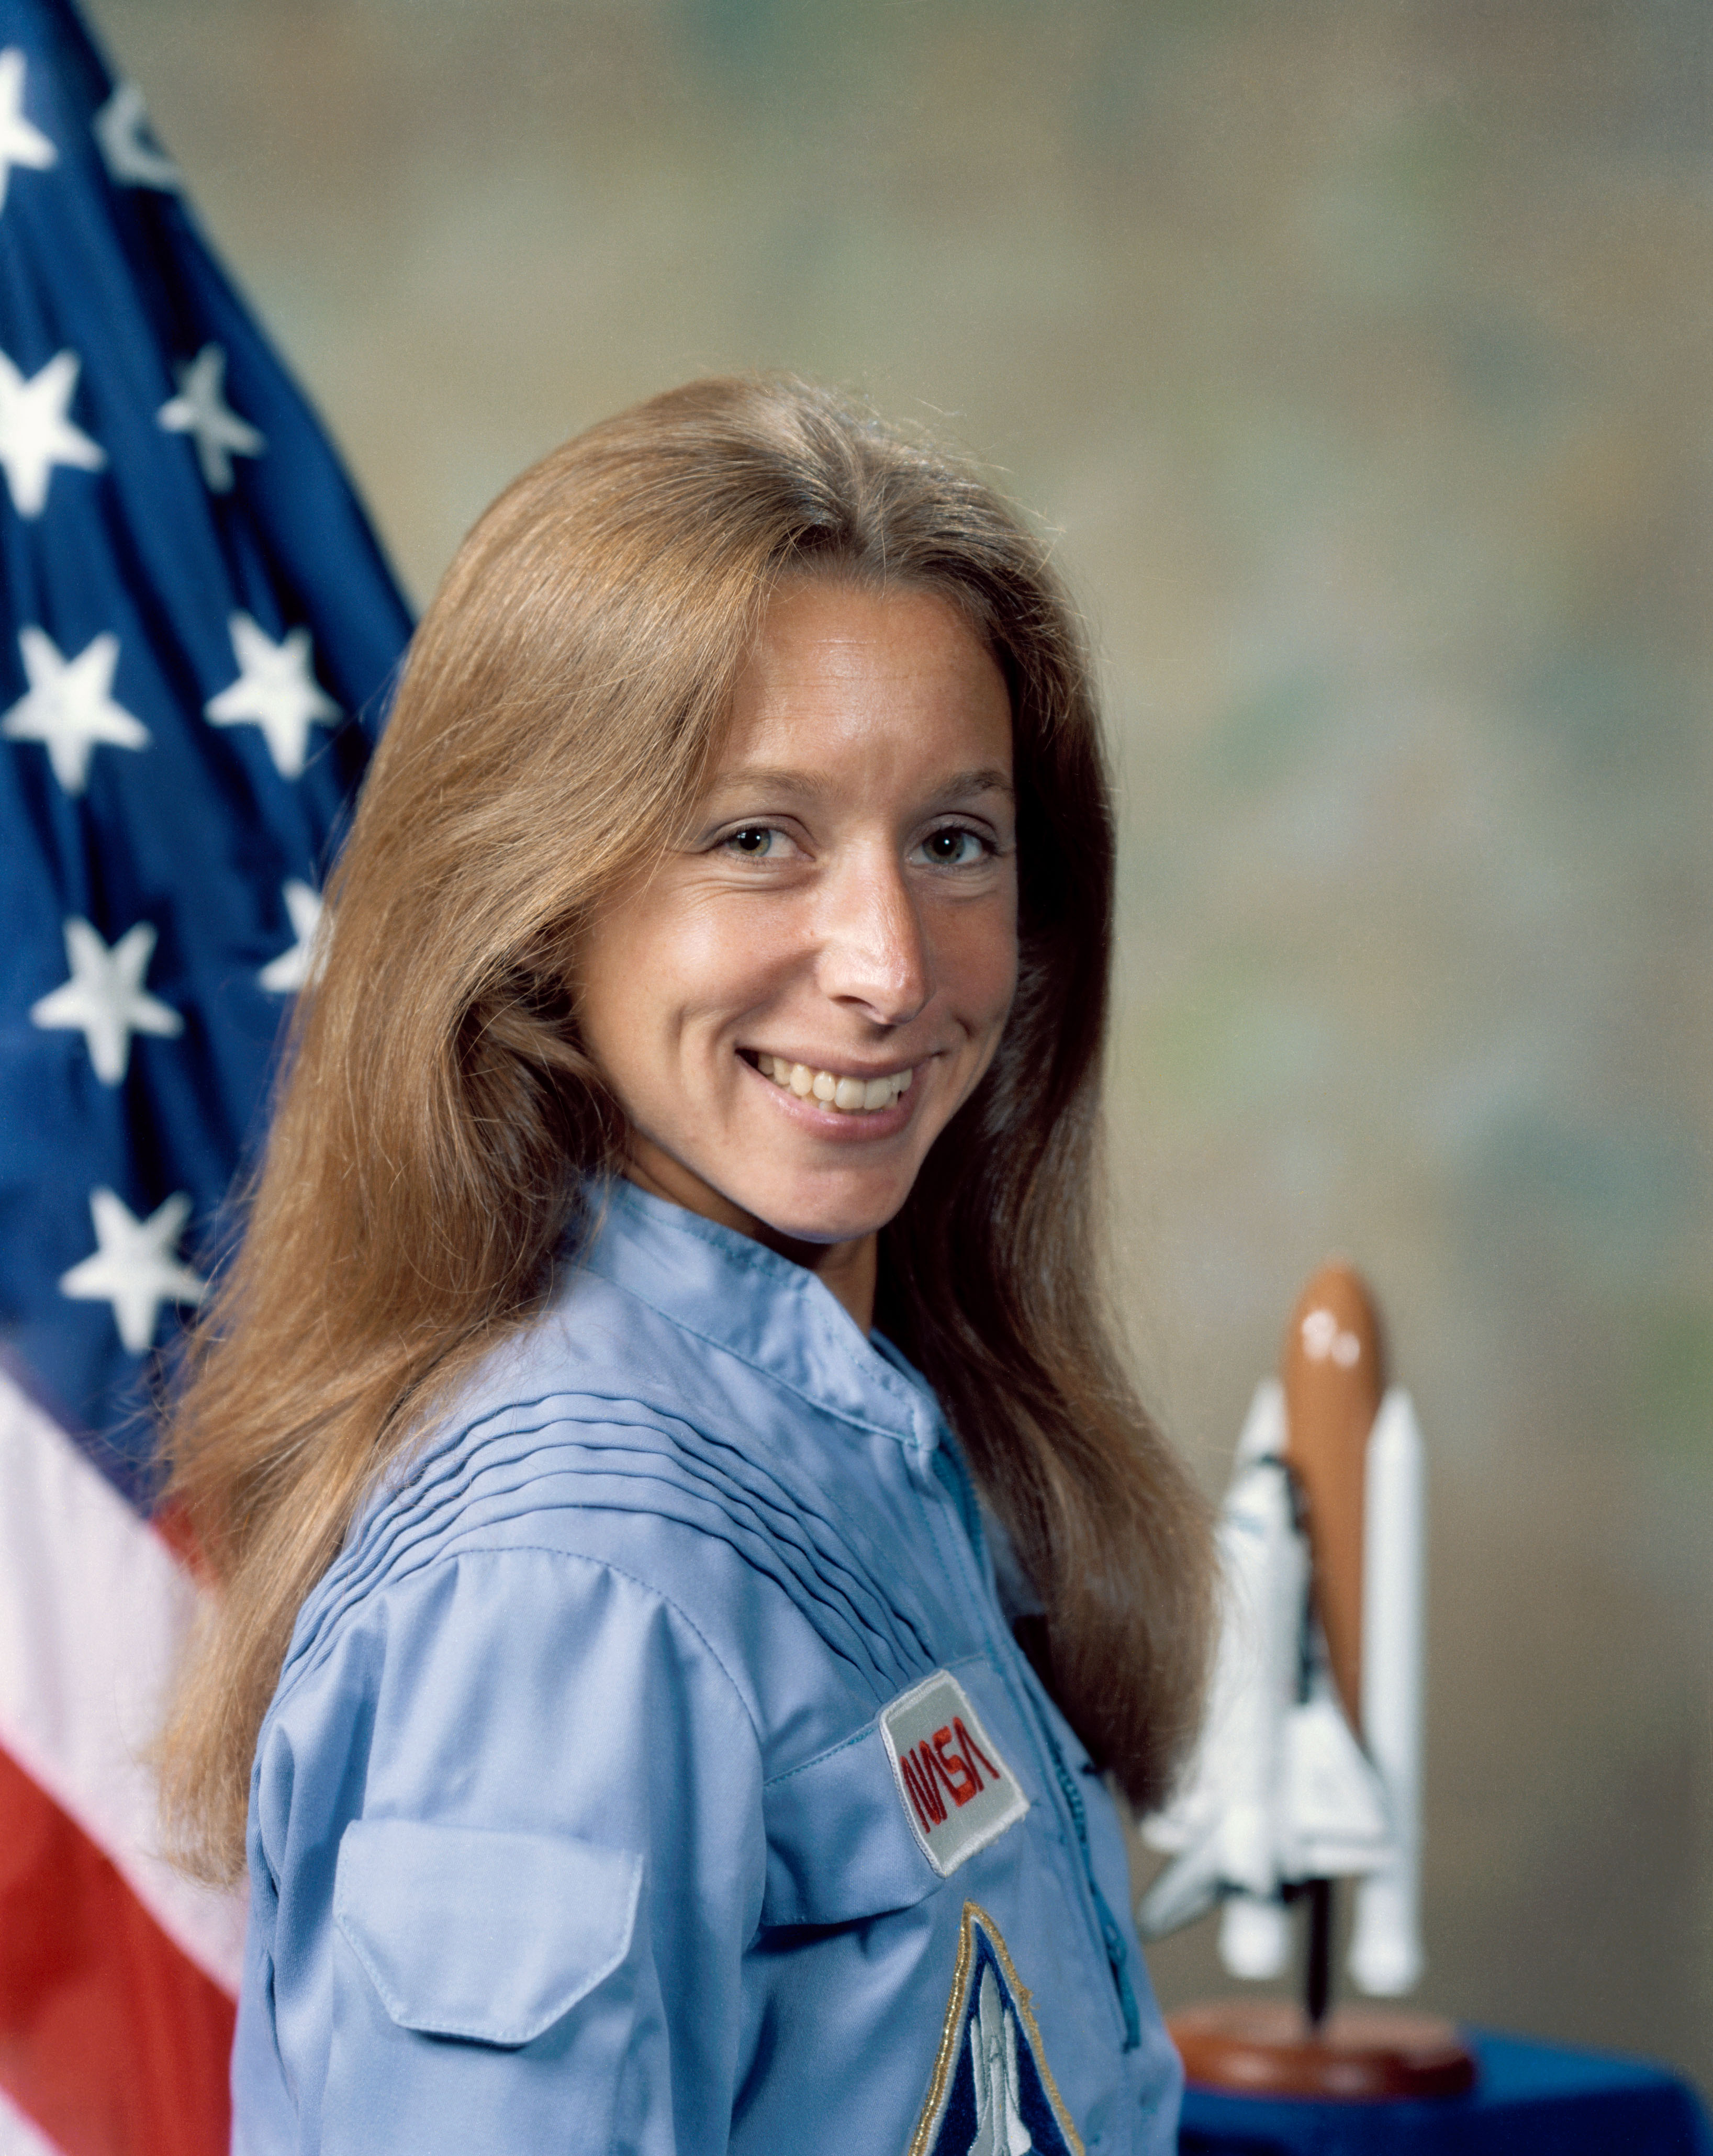 Group 10 NASA astronaut Marsha S. Ivins